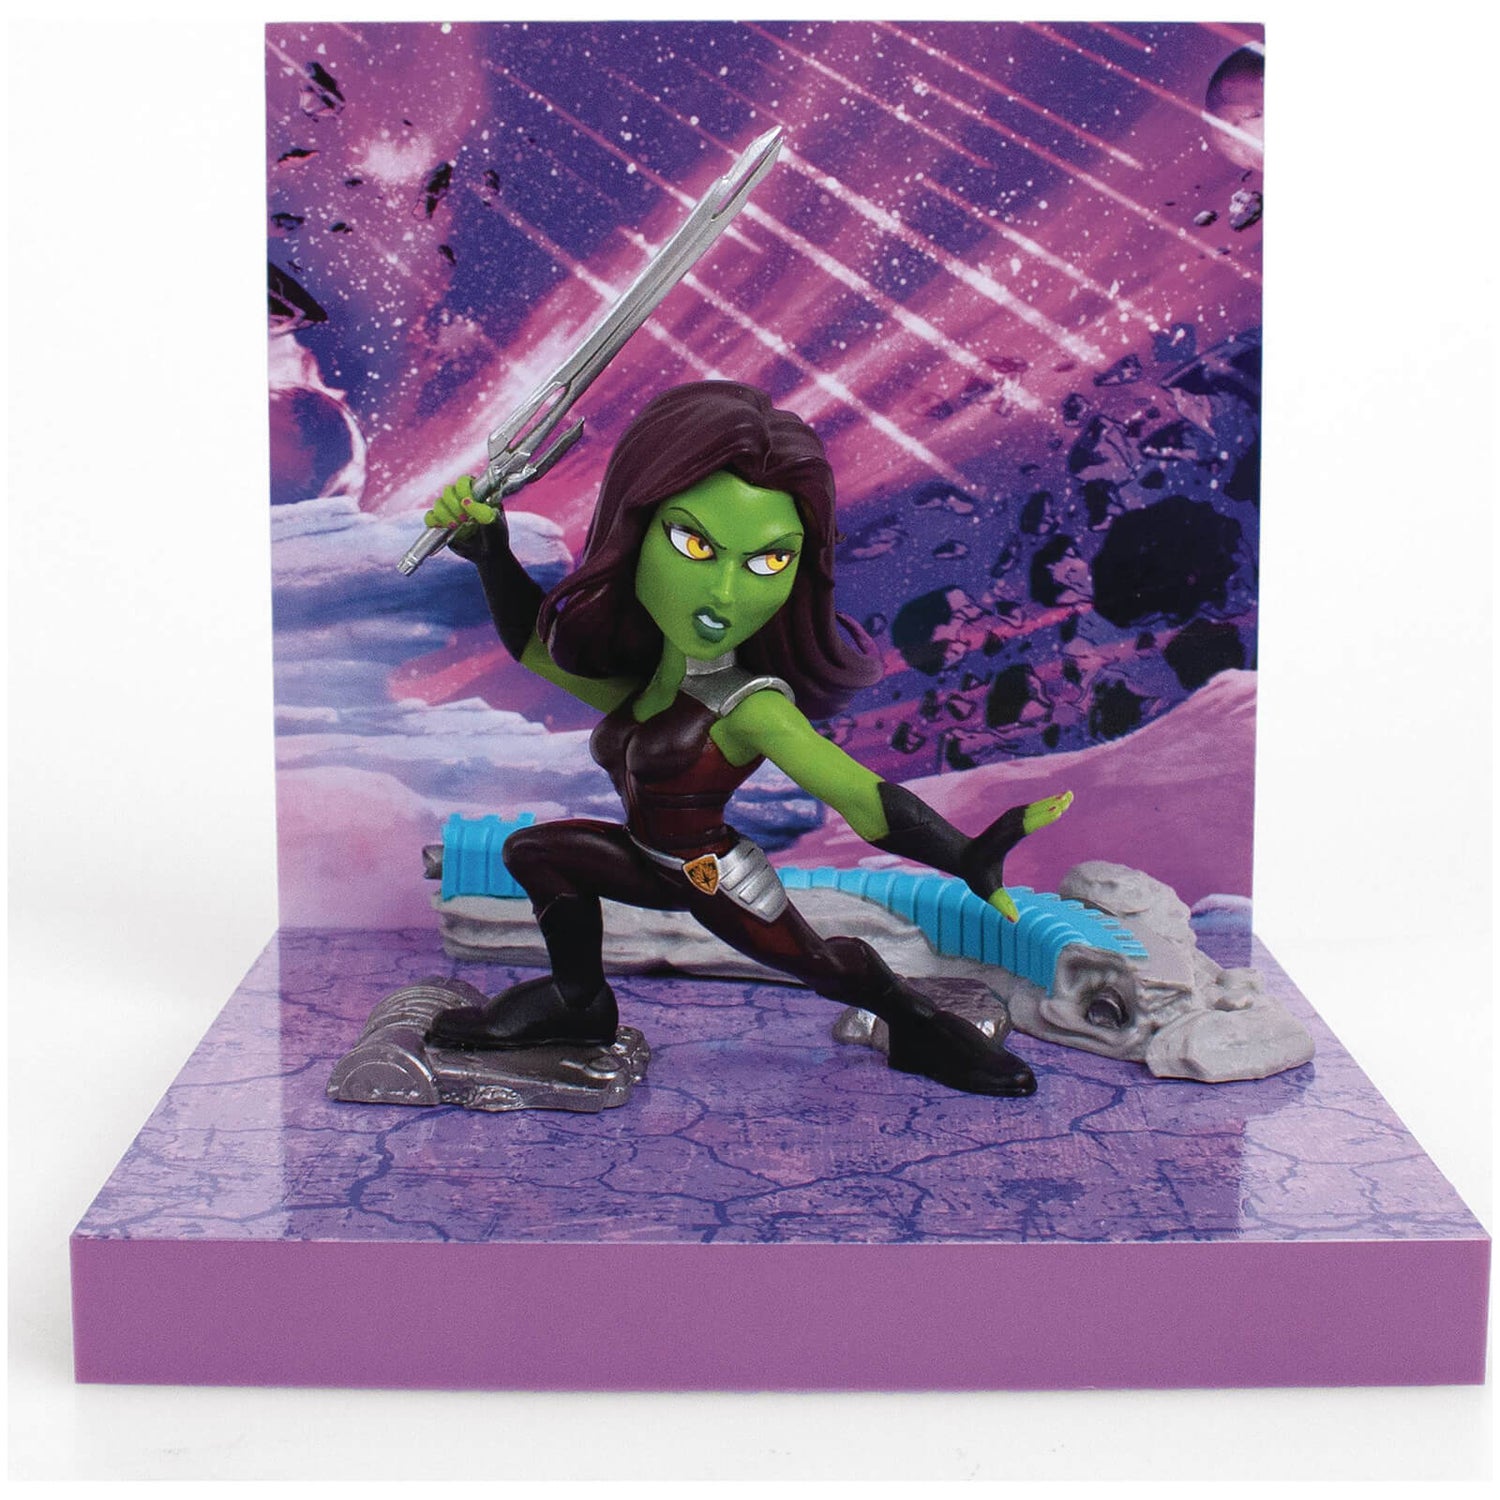 The Loyal Subjects Superama Marvel Comics Figural Diorama - Gamora